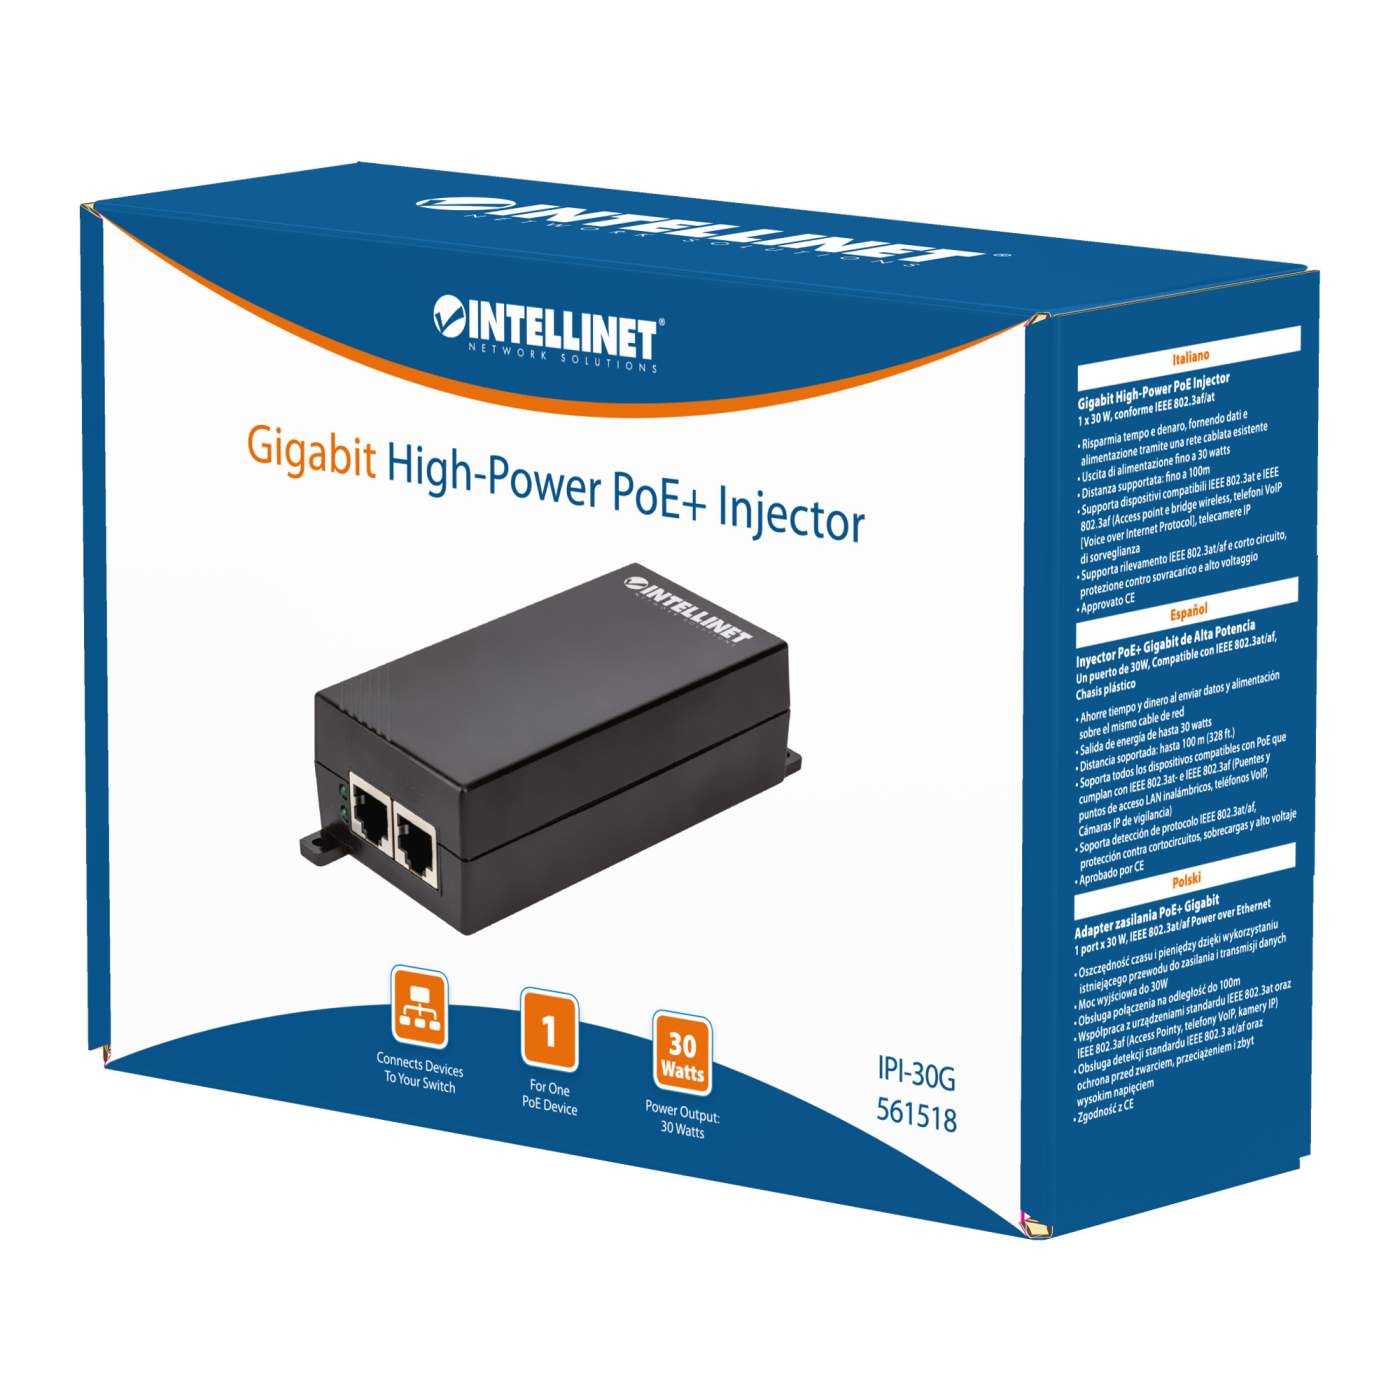 Intellinet Gigabit High-Power PoE+ Injector (561518)